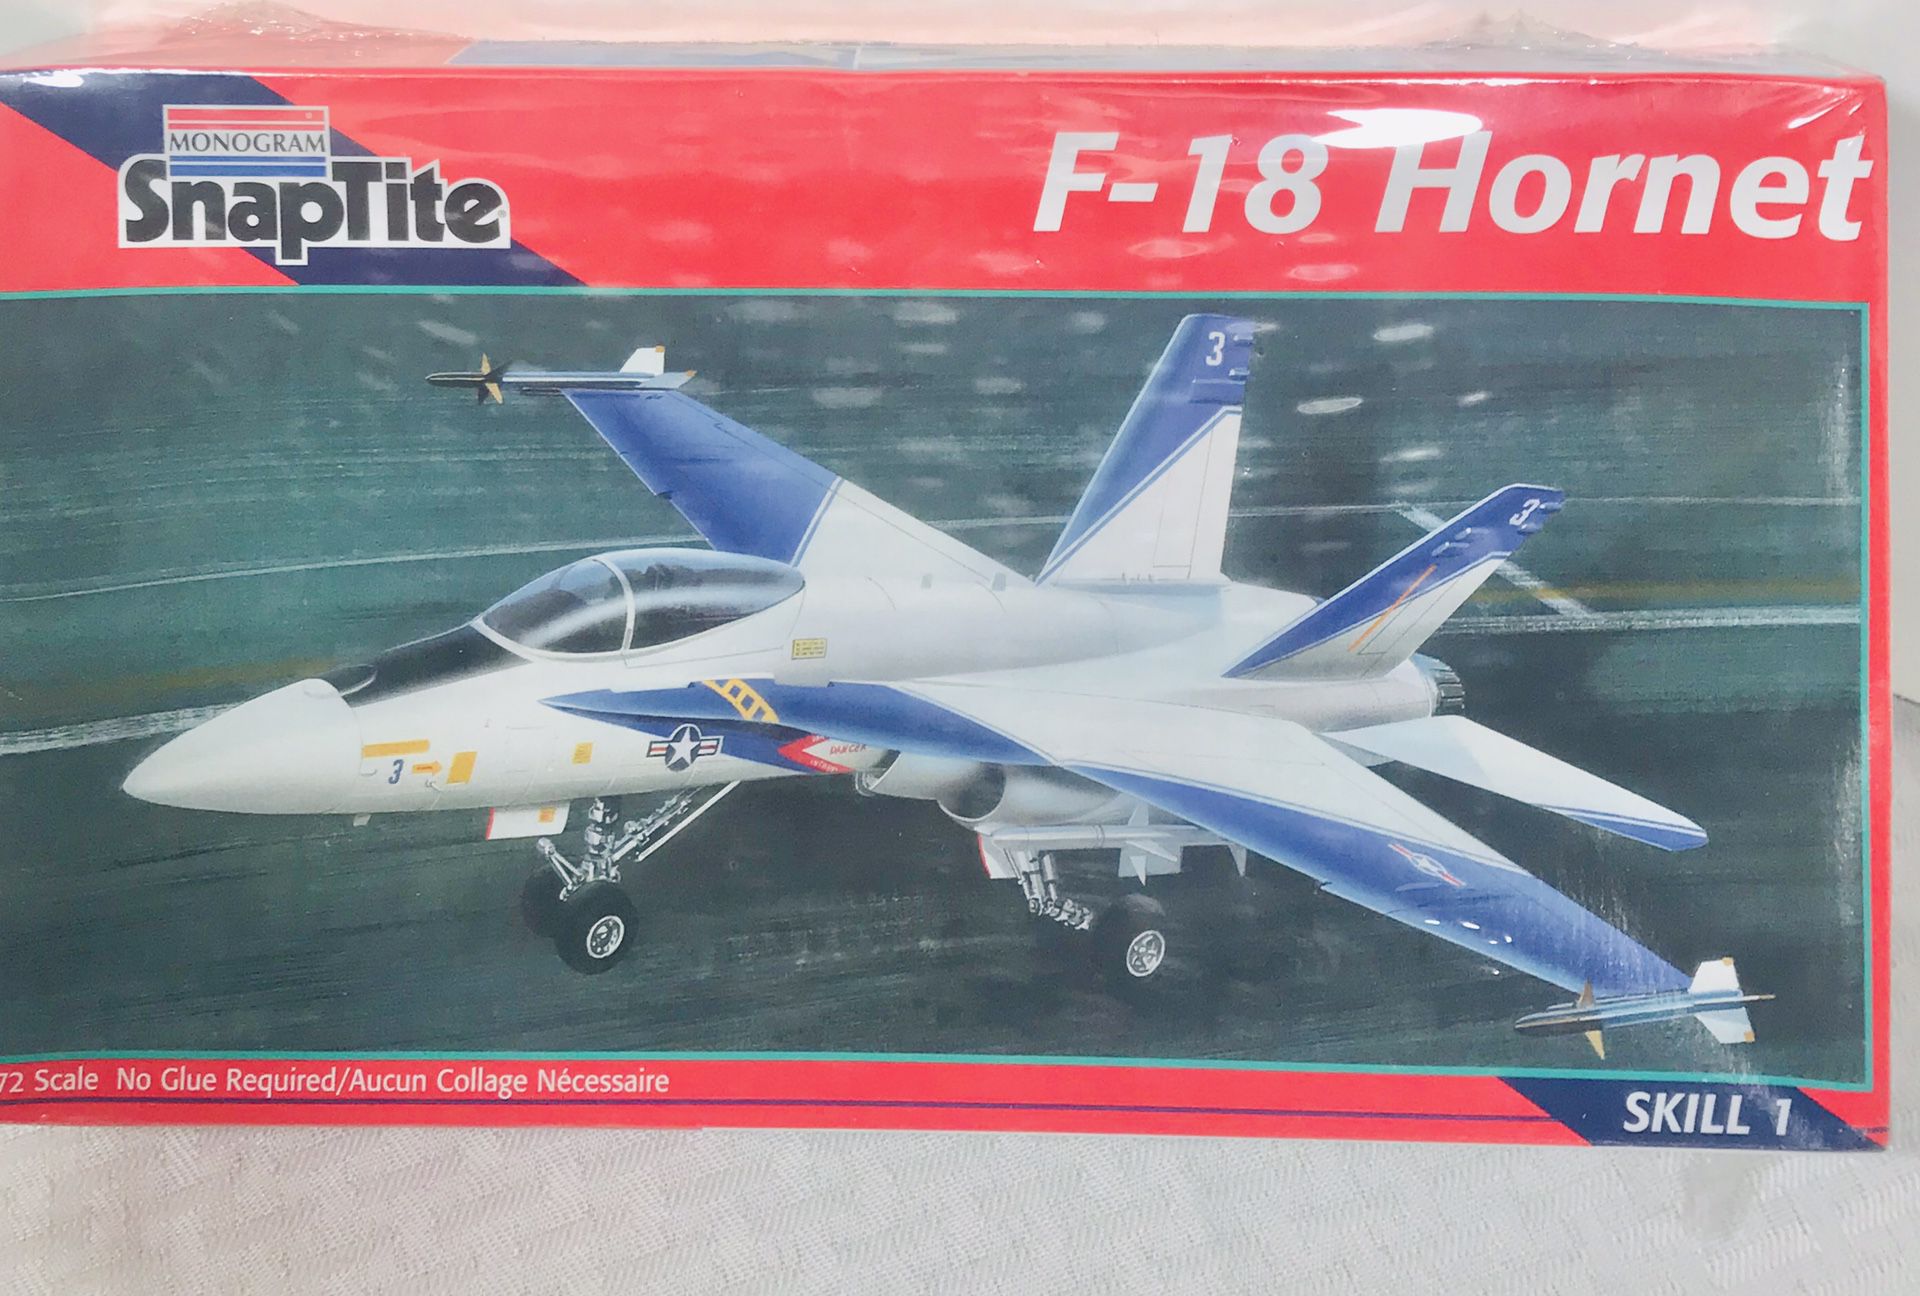 Vintage 1995 Monogram SnapTite F-18 Hornet 1:72 model scale